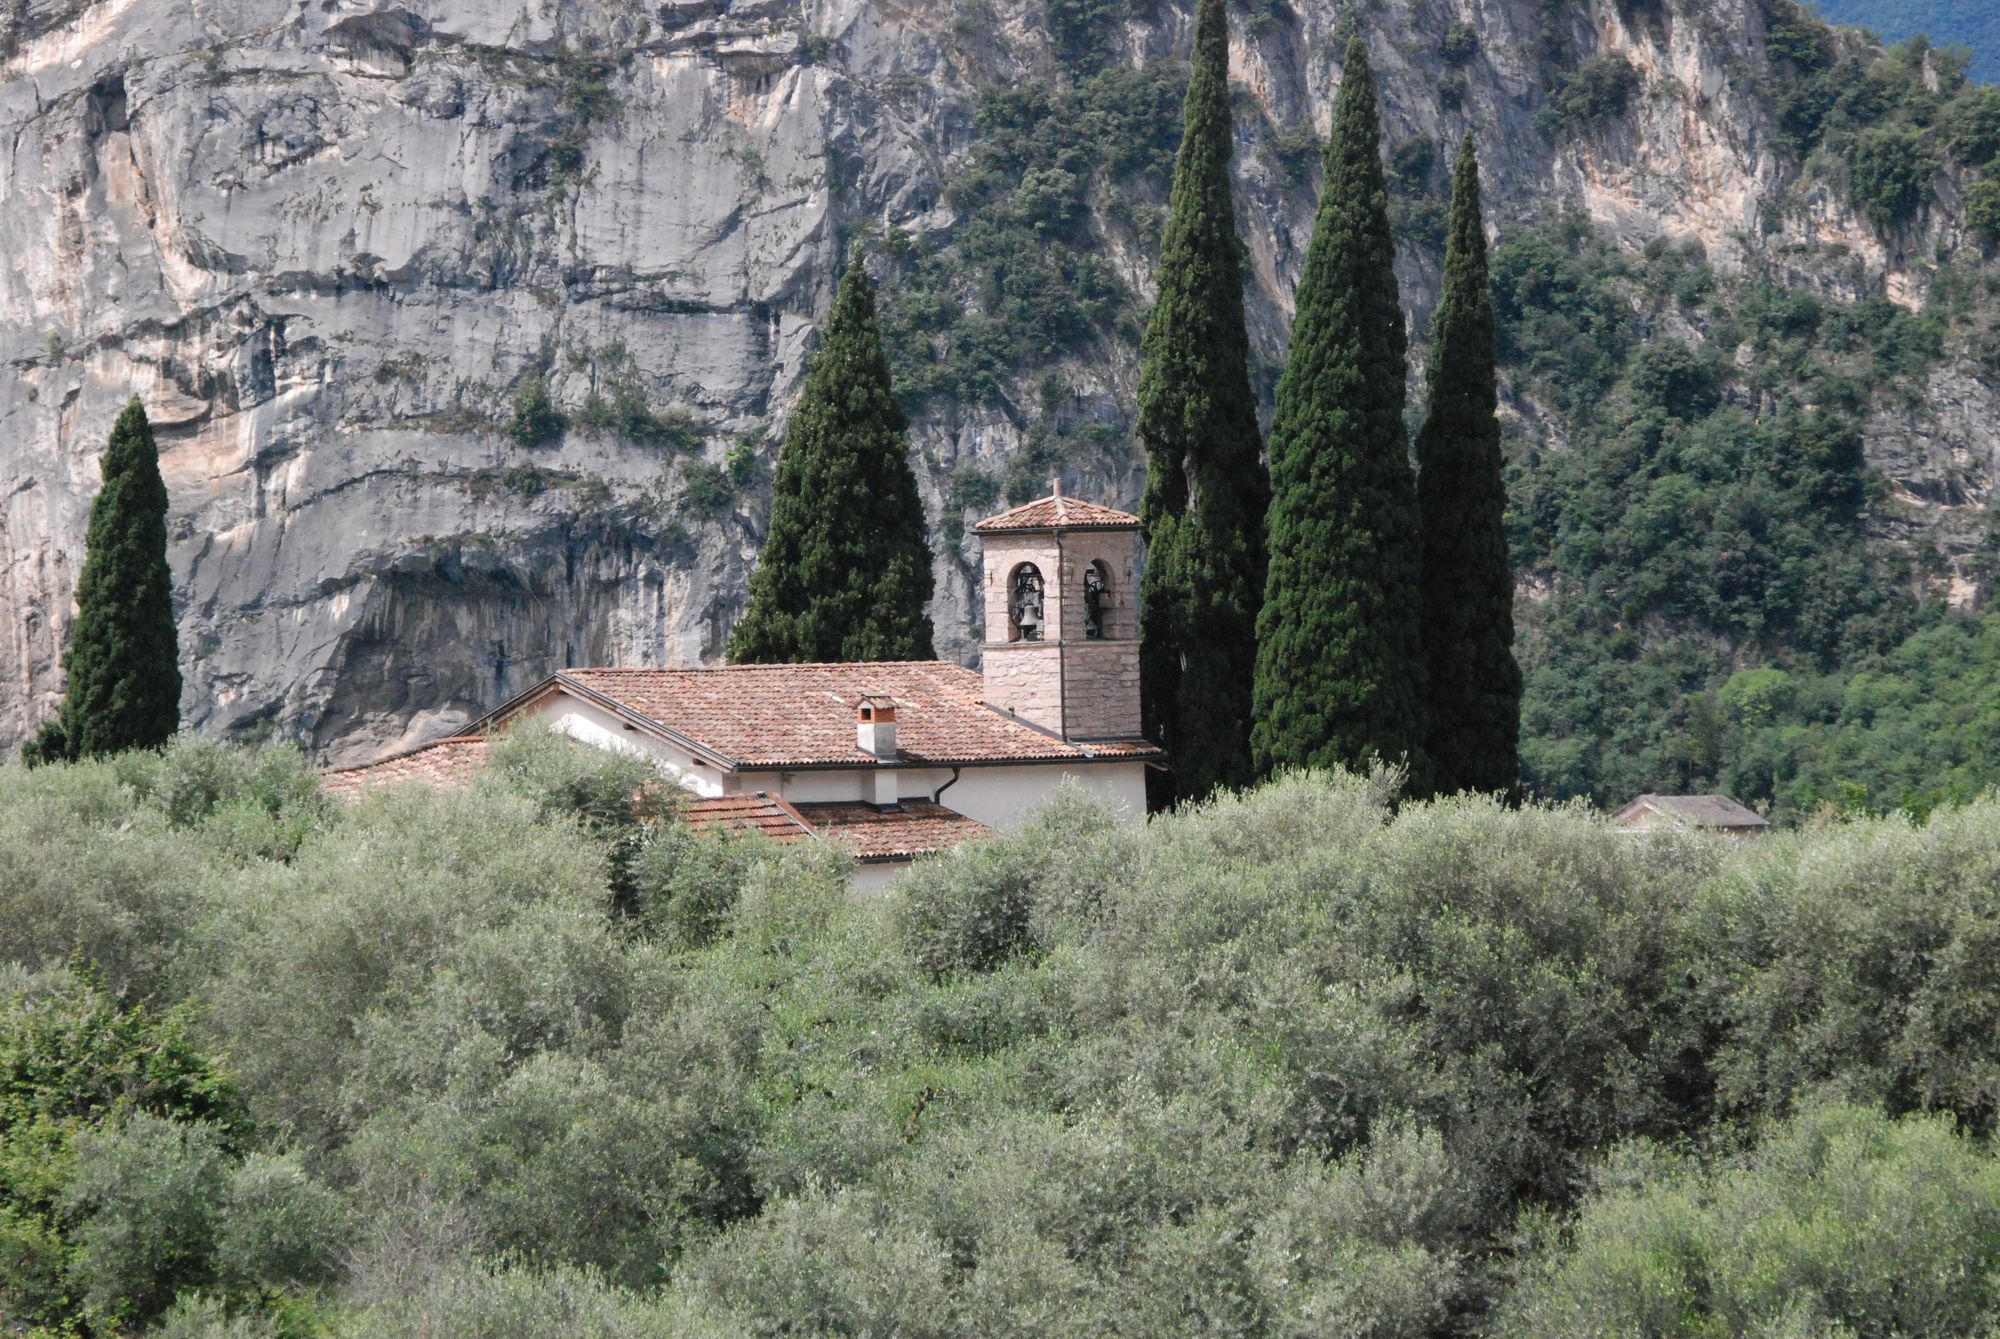 One of the churches around Arco, on the banks of Lake Garda.